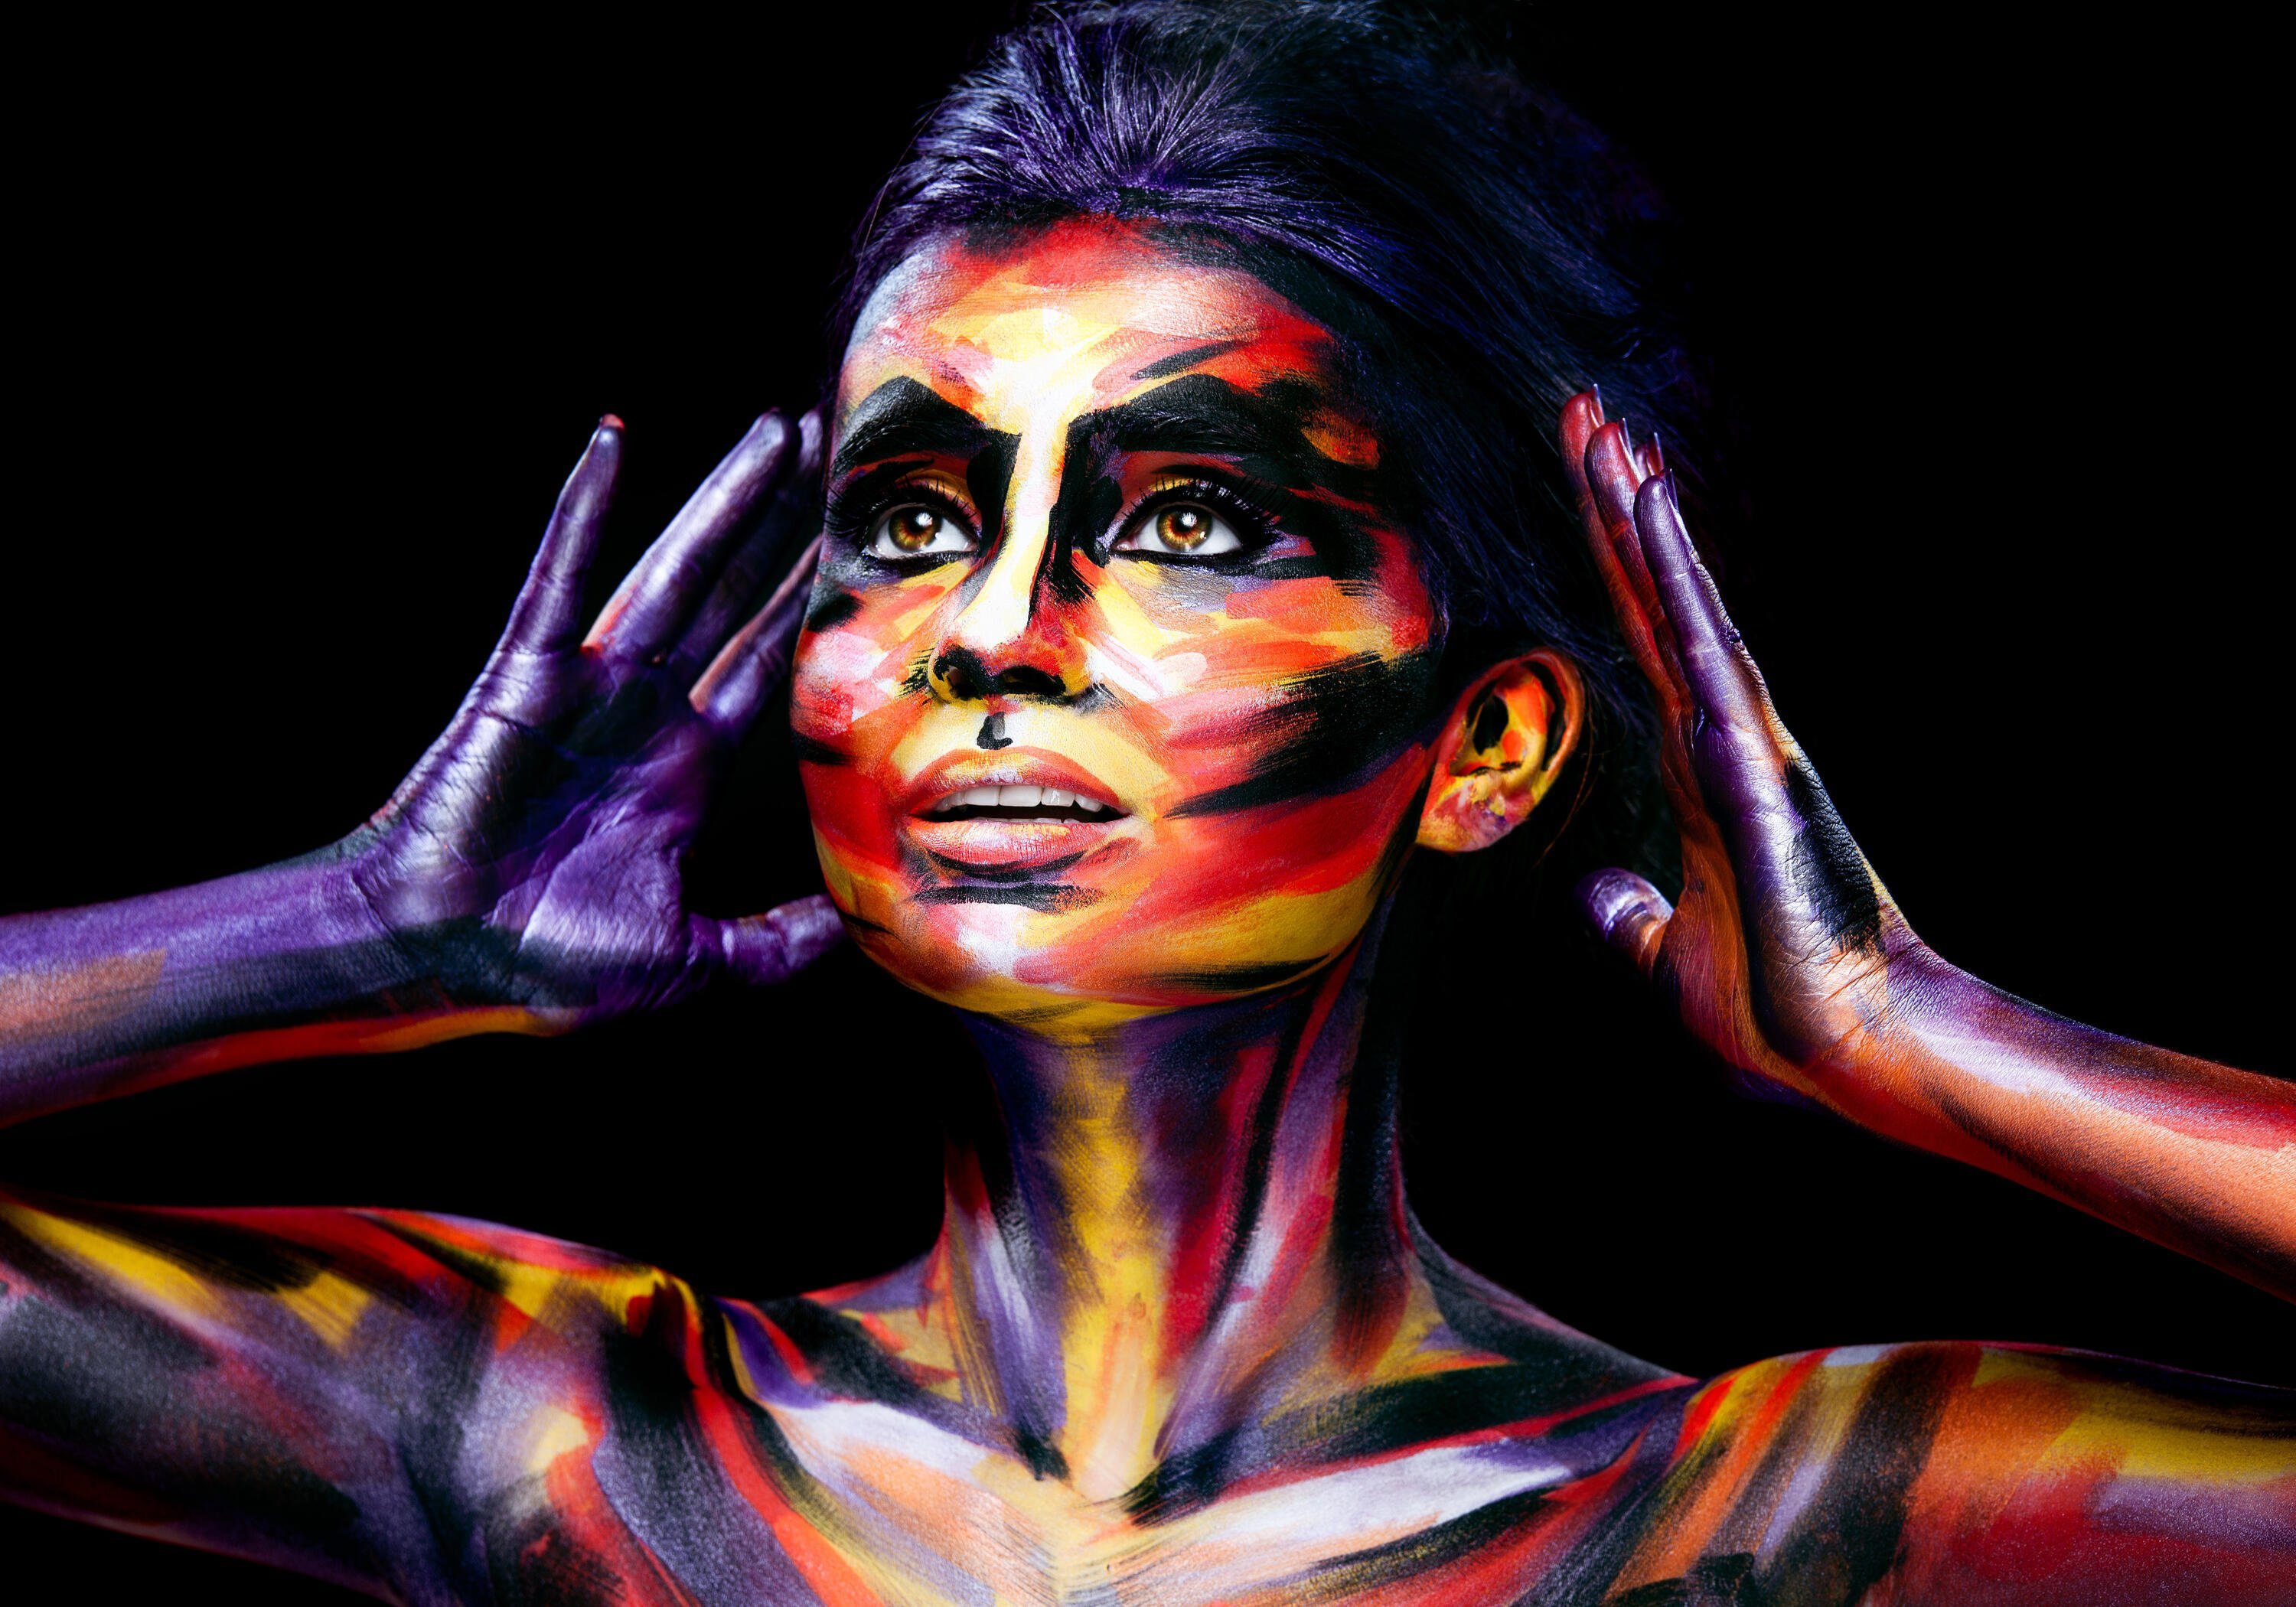 wandmotiv24 Fototapete Frau bemalt mit verschiedenen Farben, strukturiert, Wandtapete, Motivtapete, matt, Vinyltapete, selbstklebend